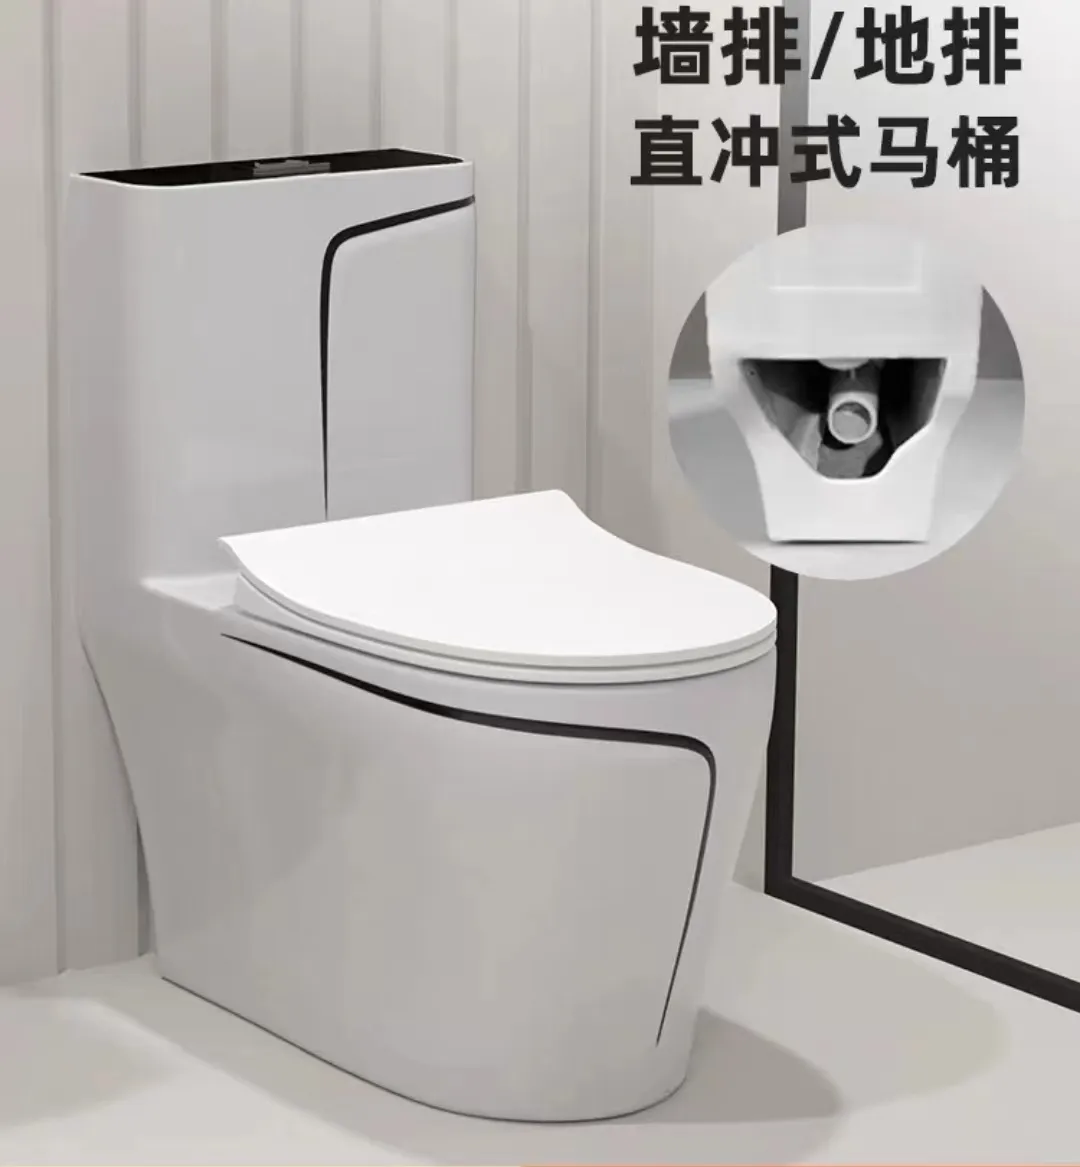 Sağlık gereçleri tek parça sifonik kızarma zemin monte renkli banyo tuvalet kase seramik mermer tuvalet